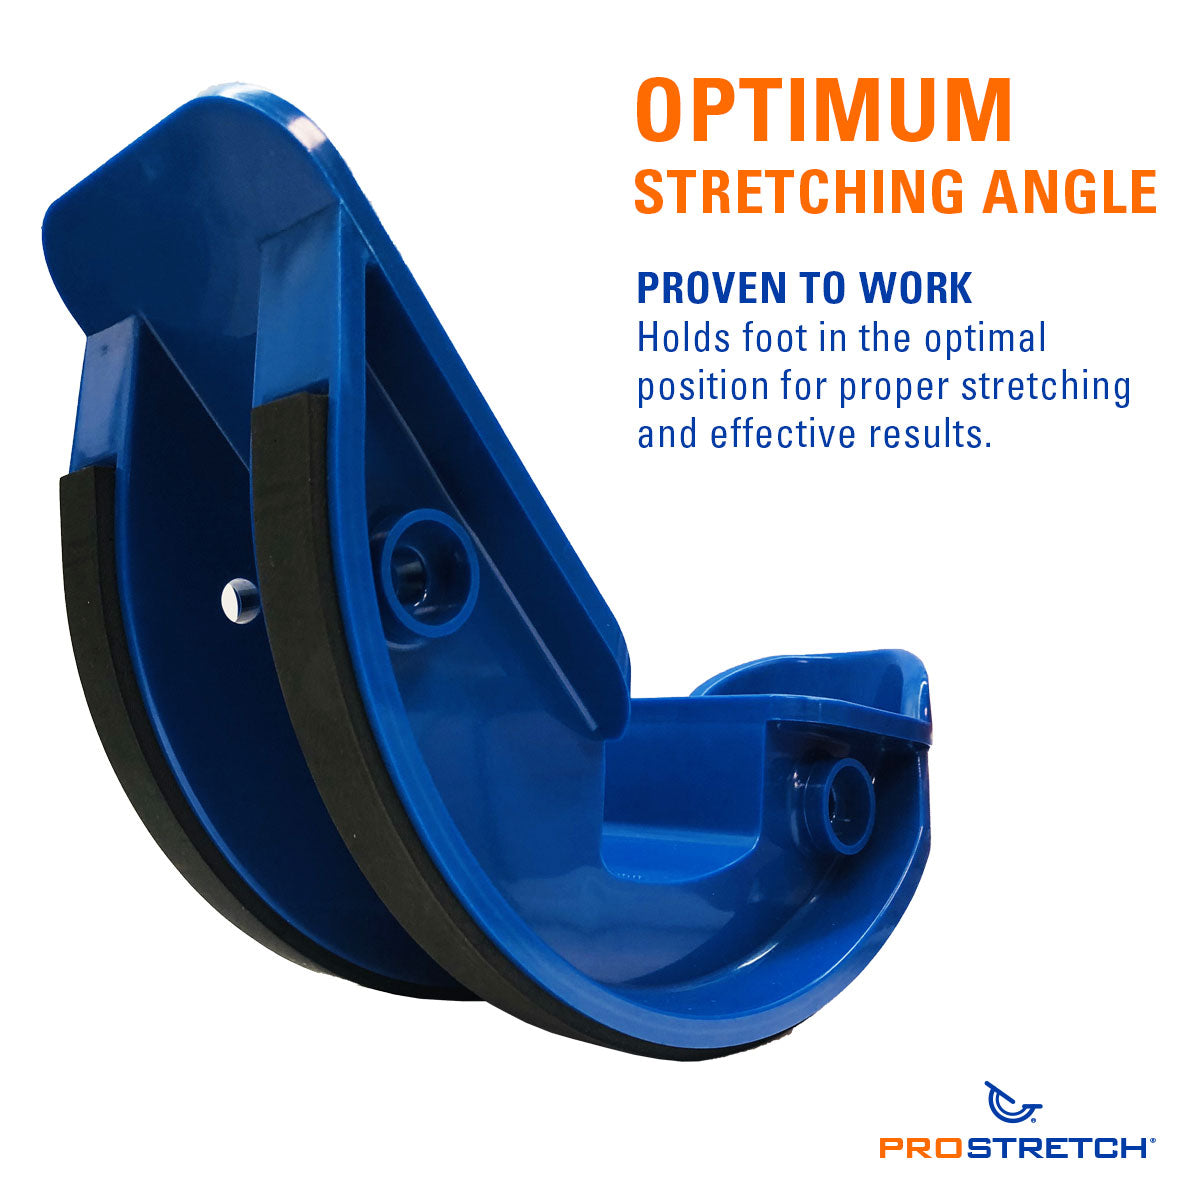 ProStretch Optimum stretching angle